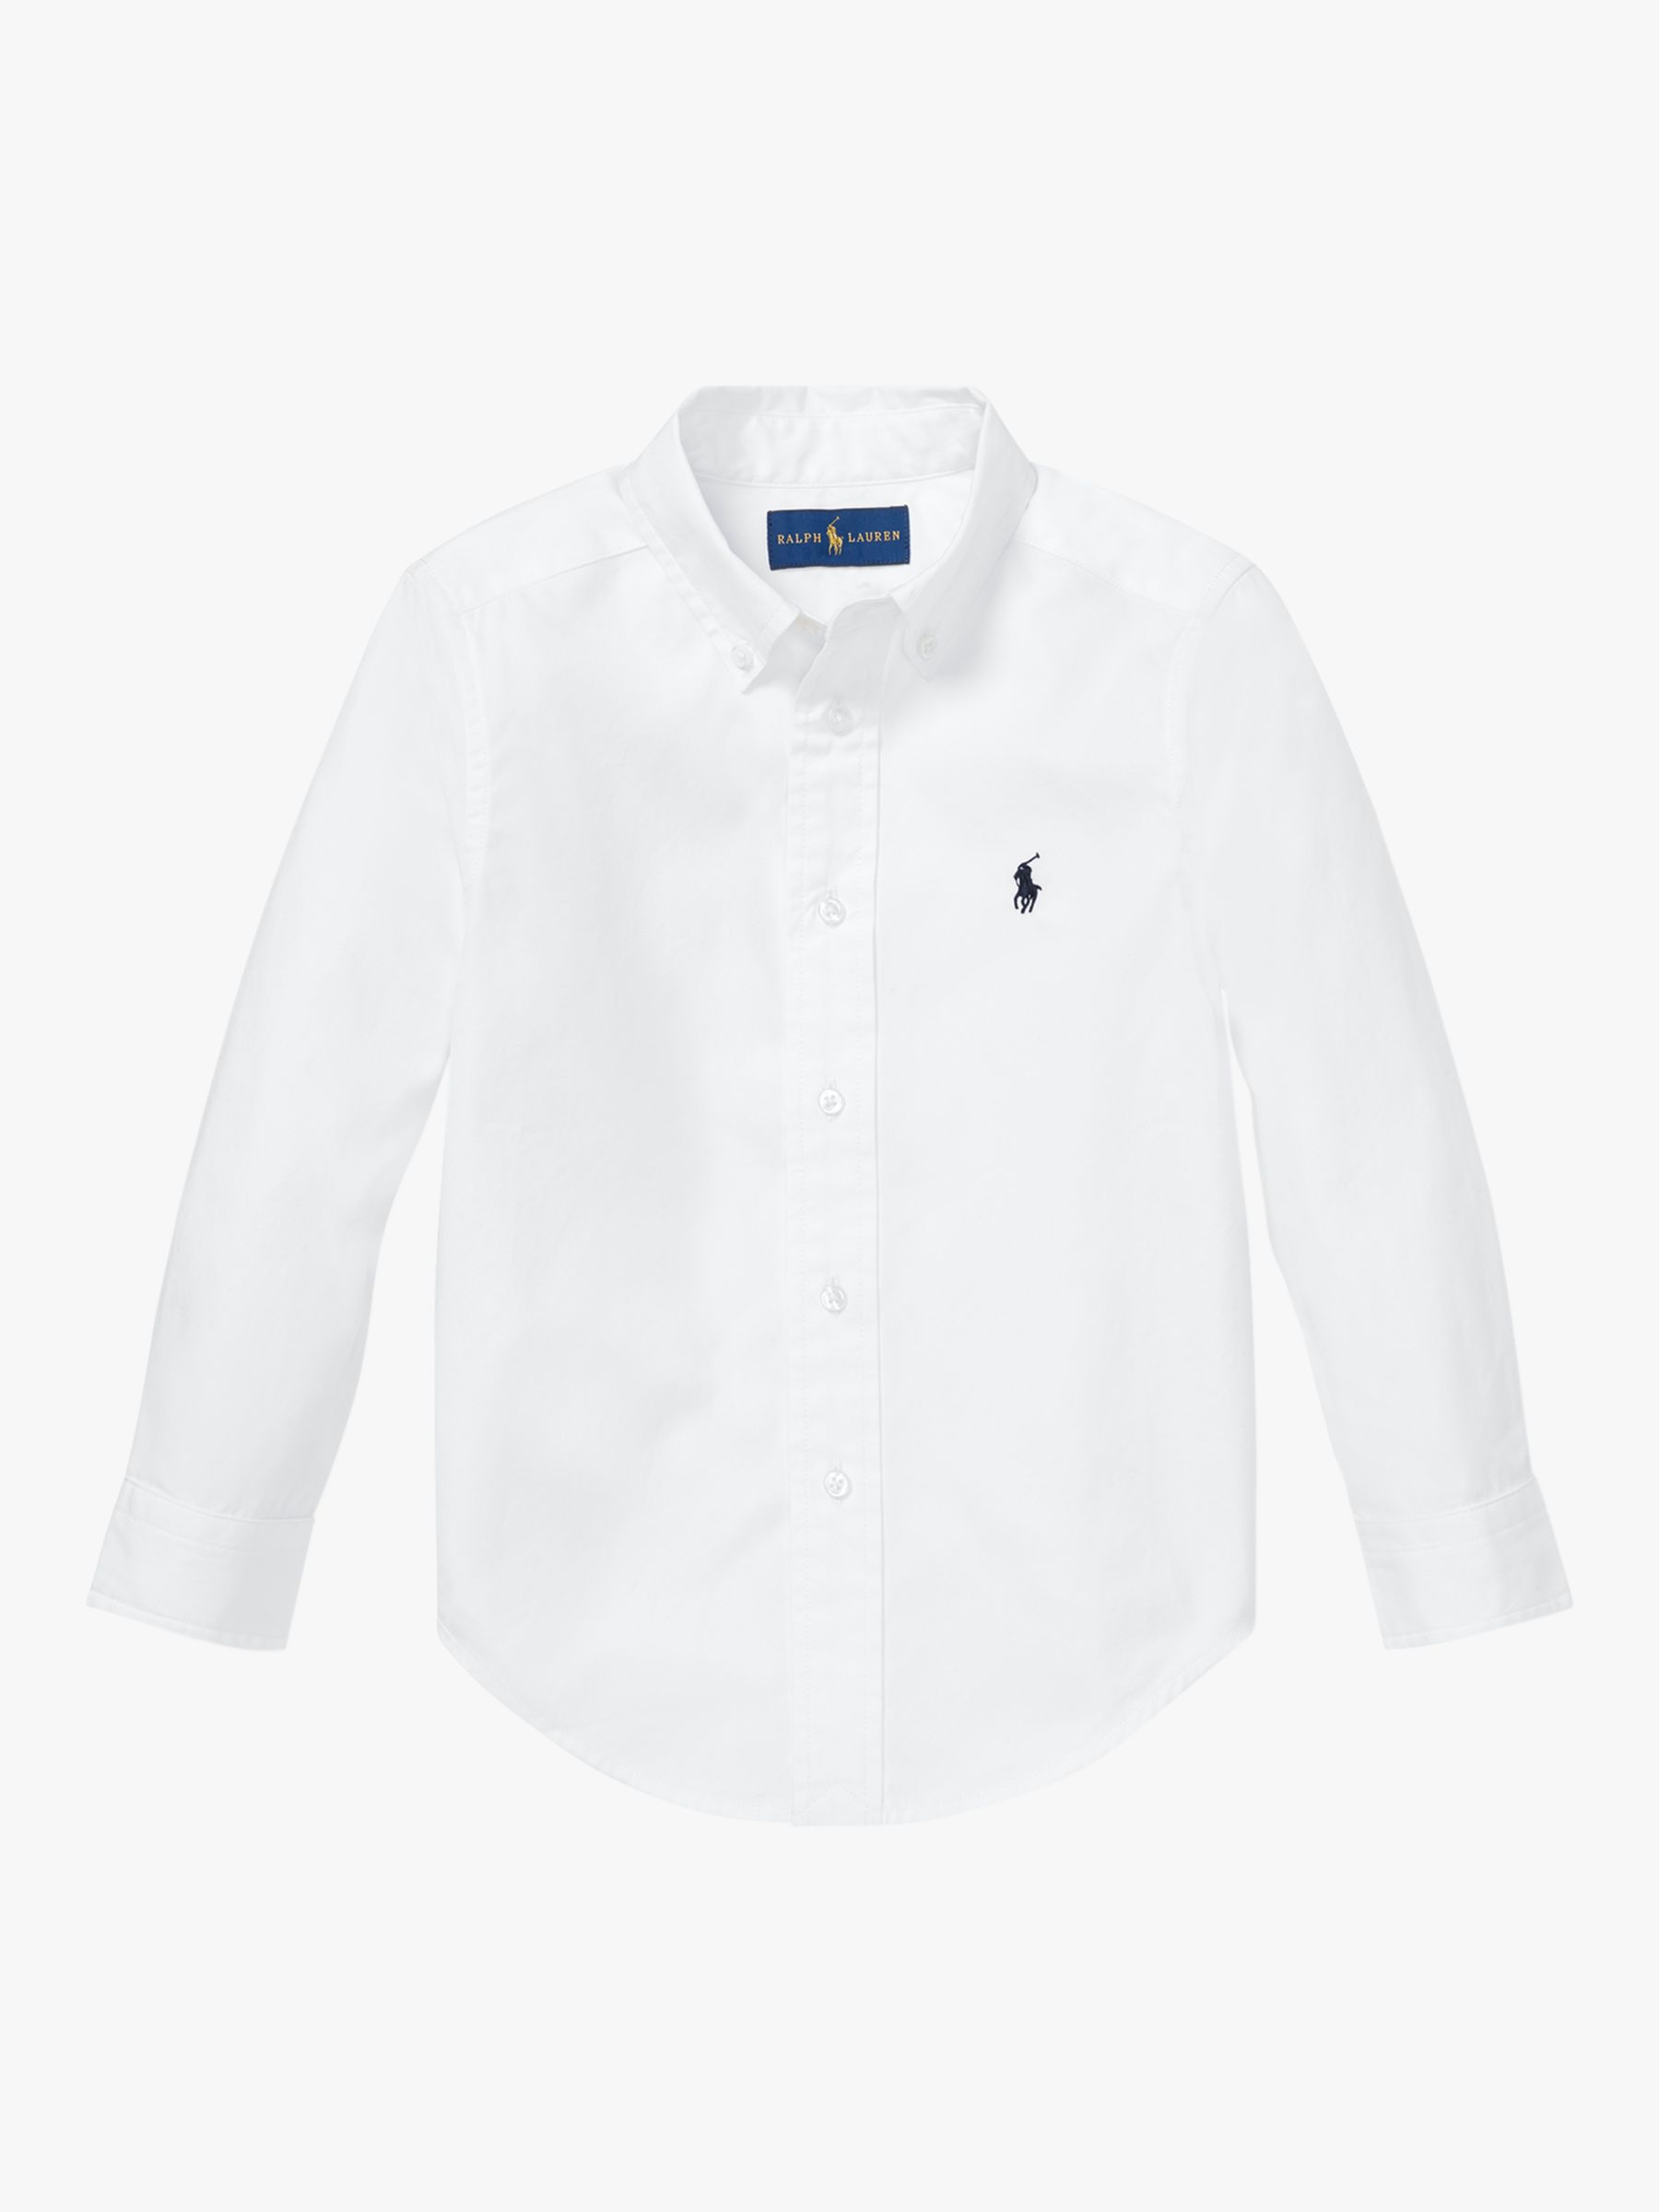 Polo Ralph Lauren Boys' Shirt, White at 